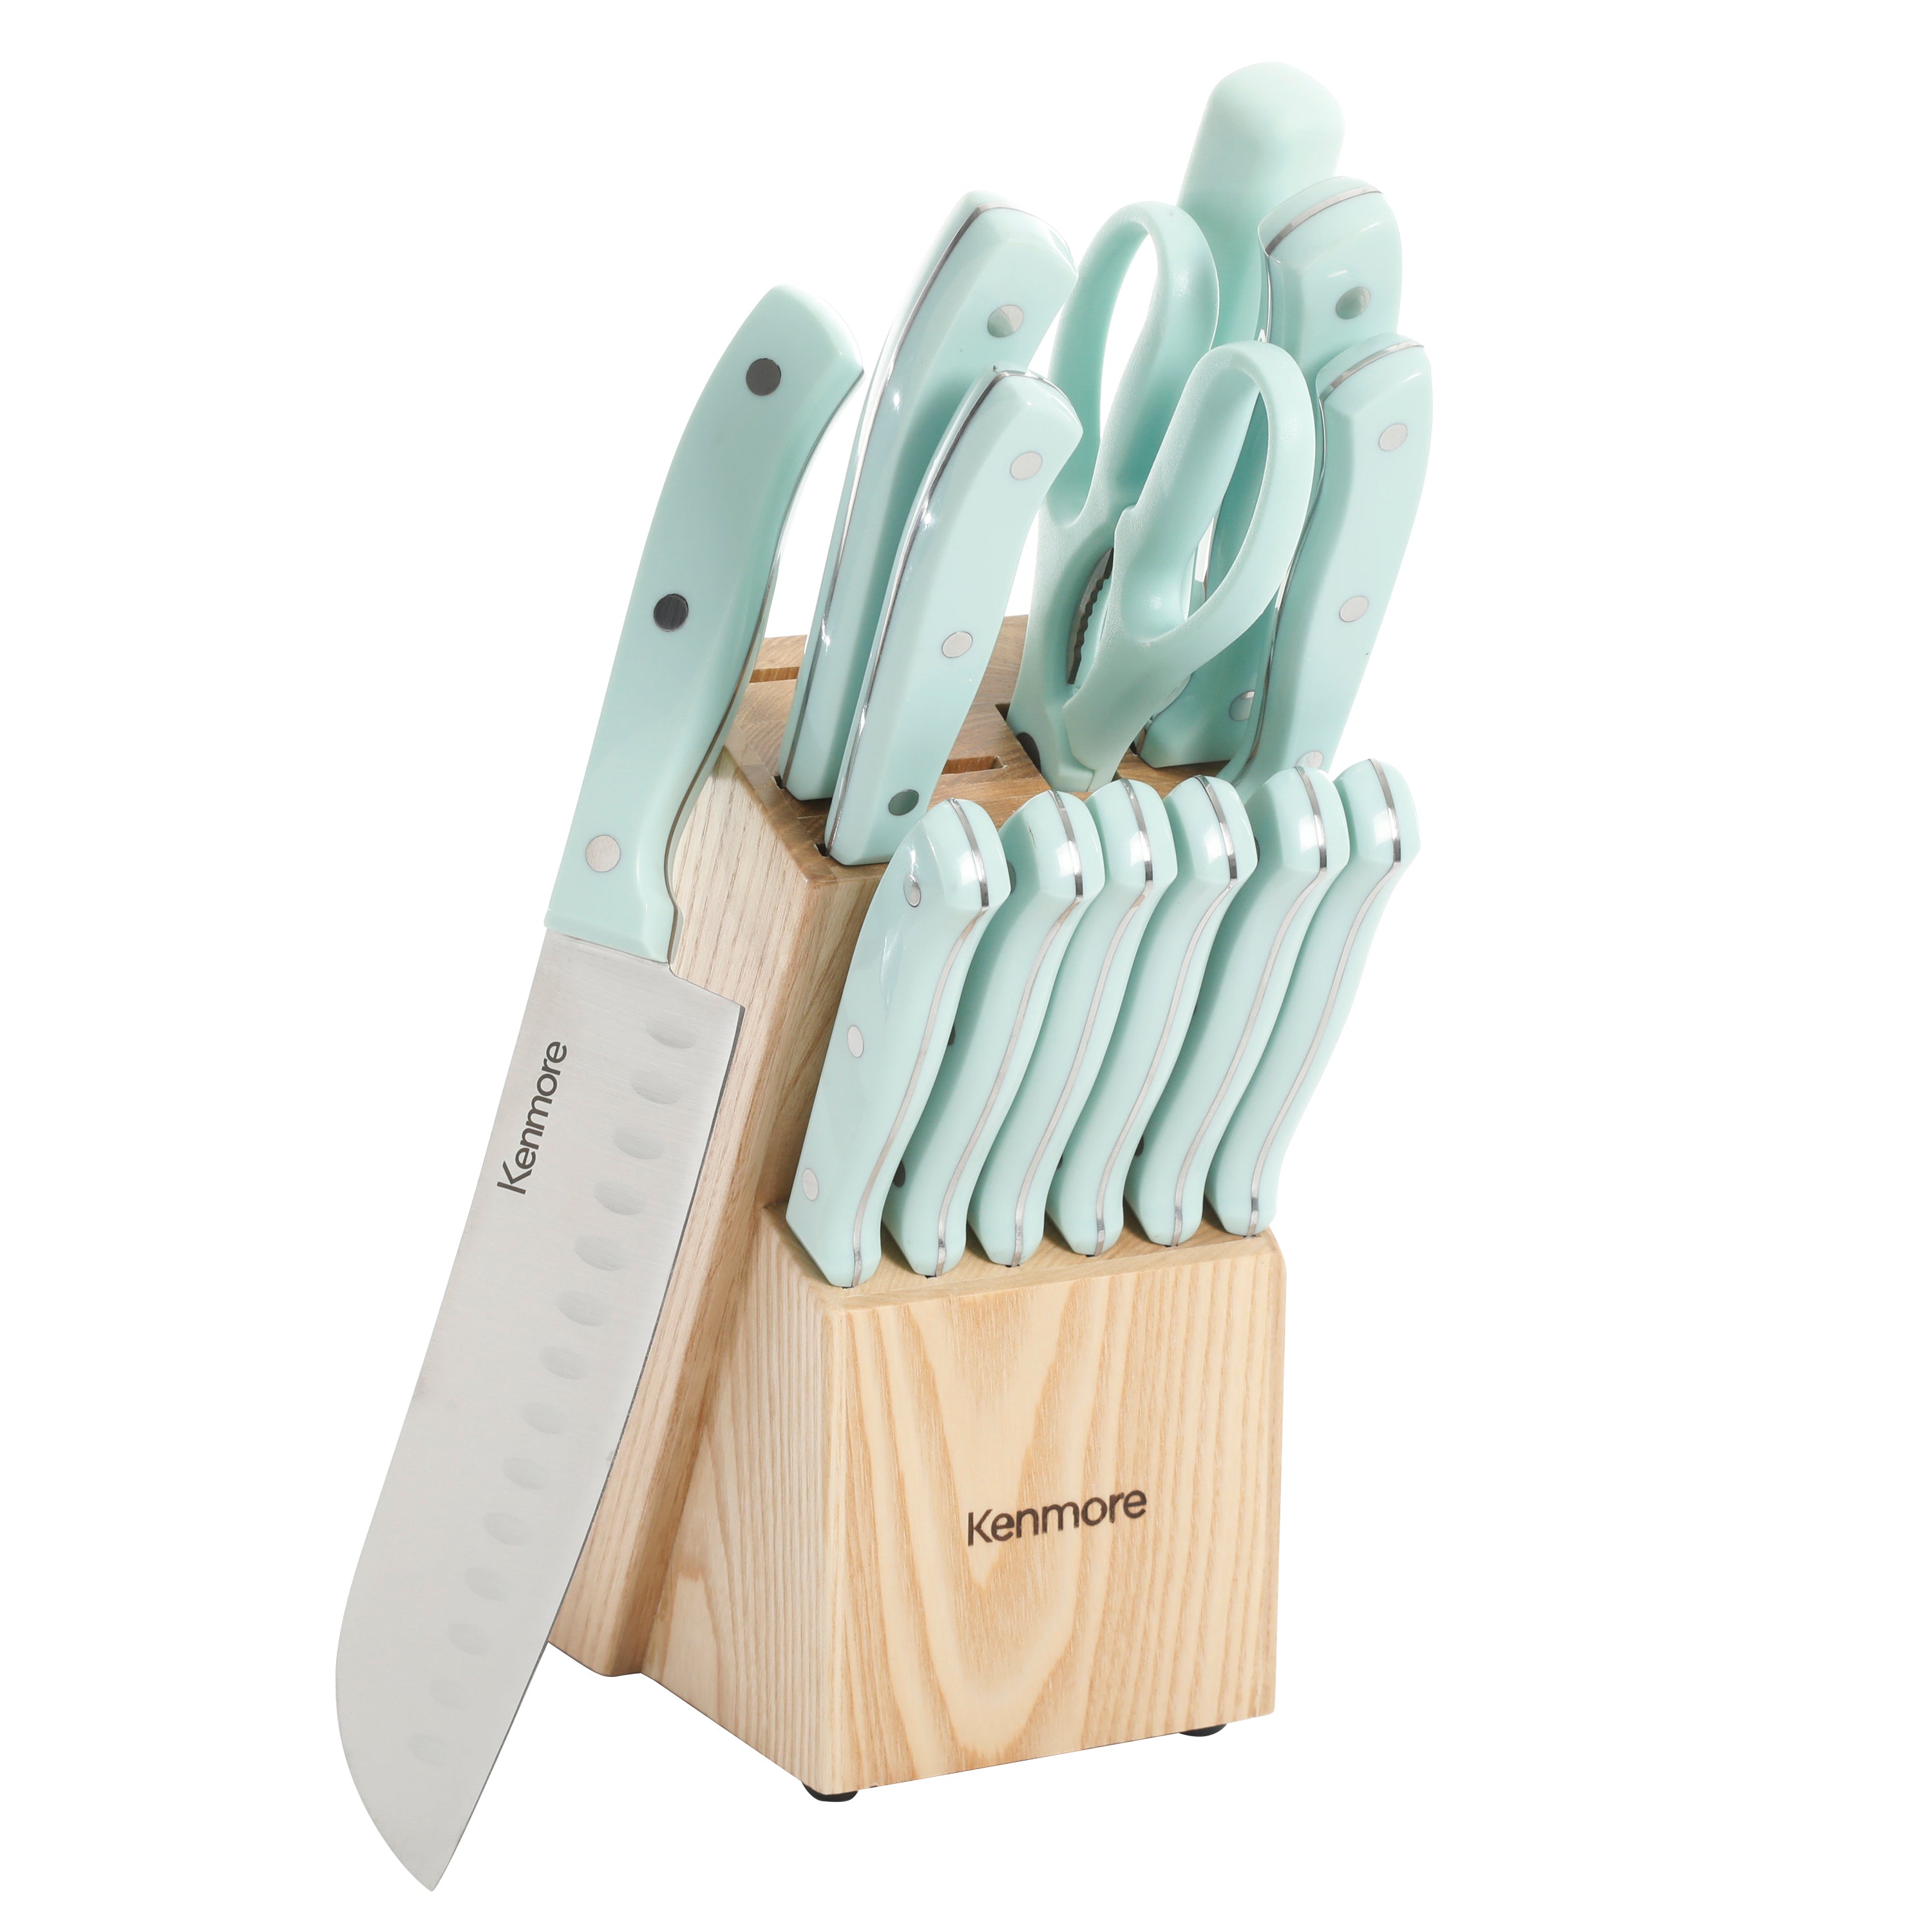 14 Piece Stainless Steel Kitchen Knife Set – Stone boomer